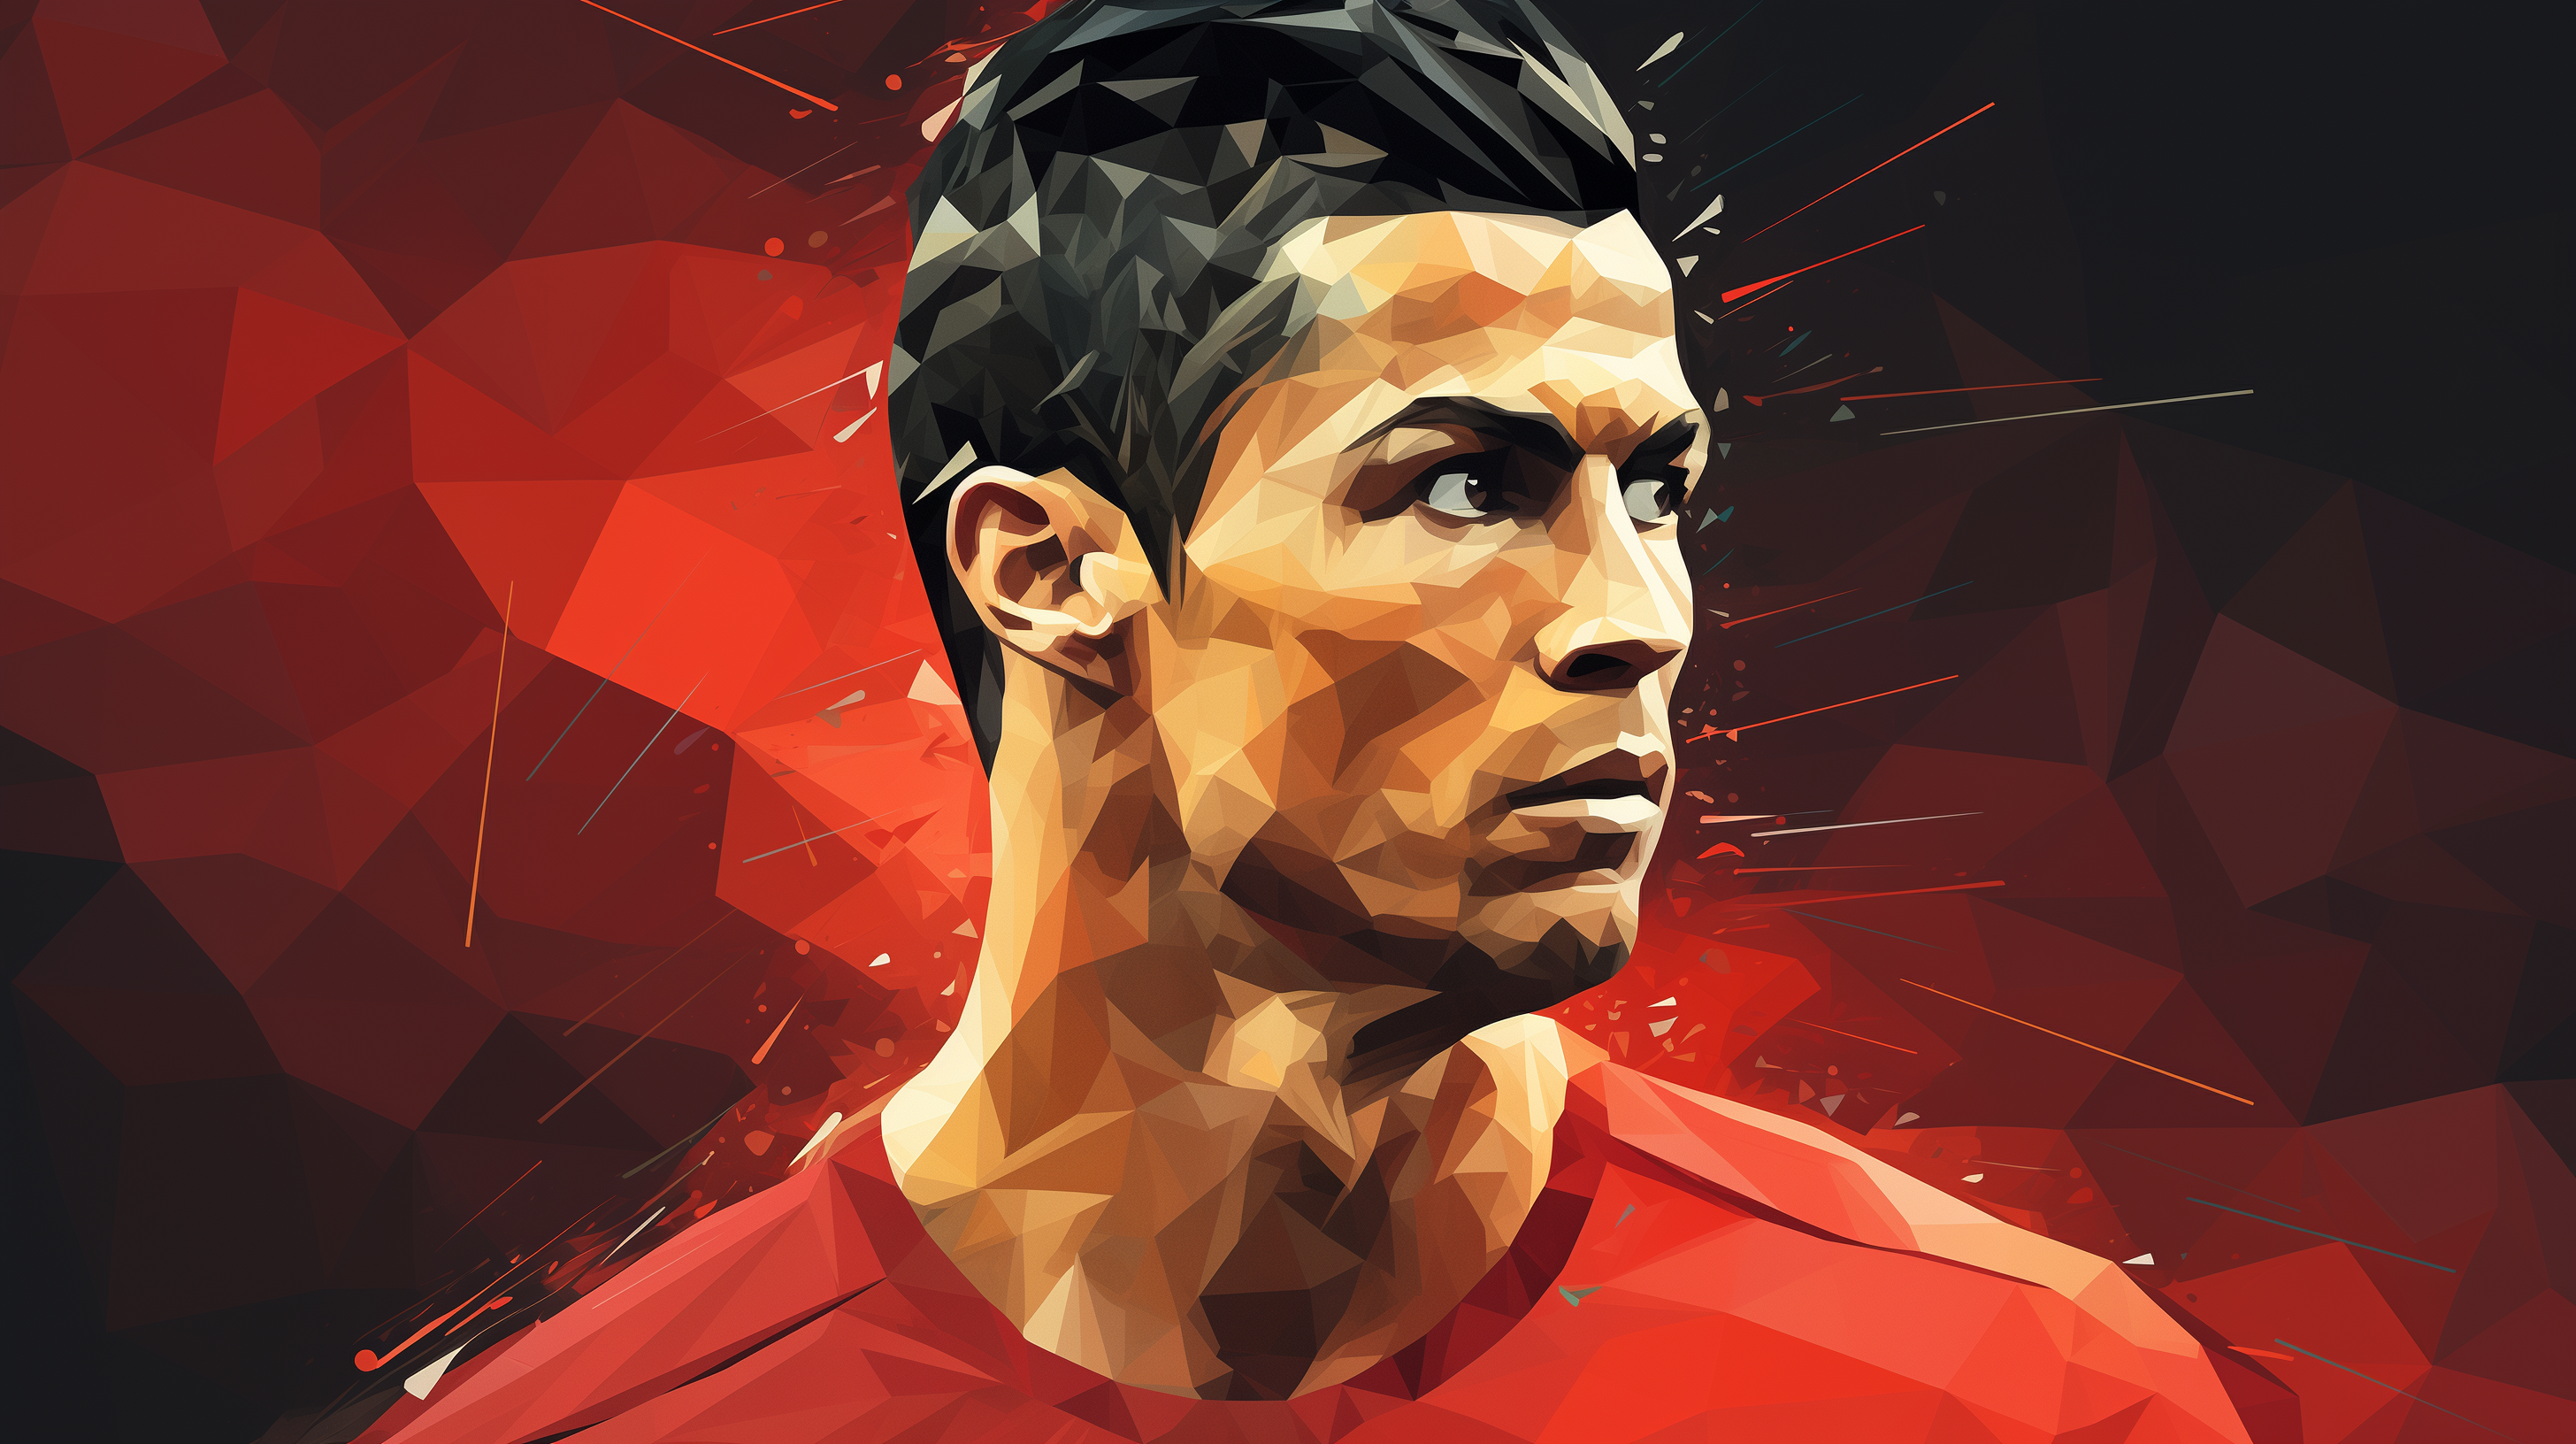 Soccer Ronaldo Wallpaper CR7 - Apps on Google Play-thanhphatduhoc.com.vn